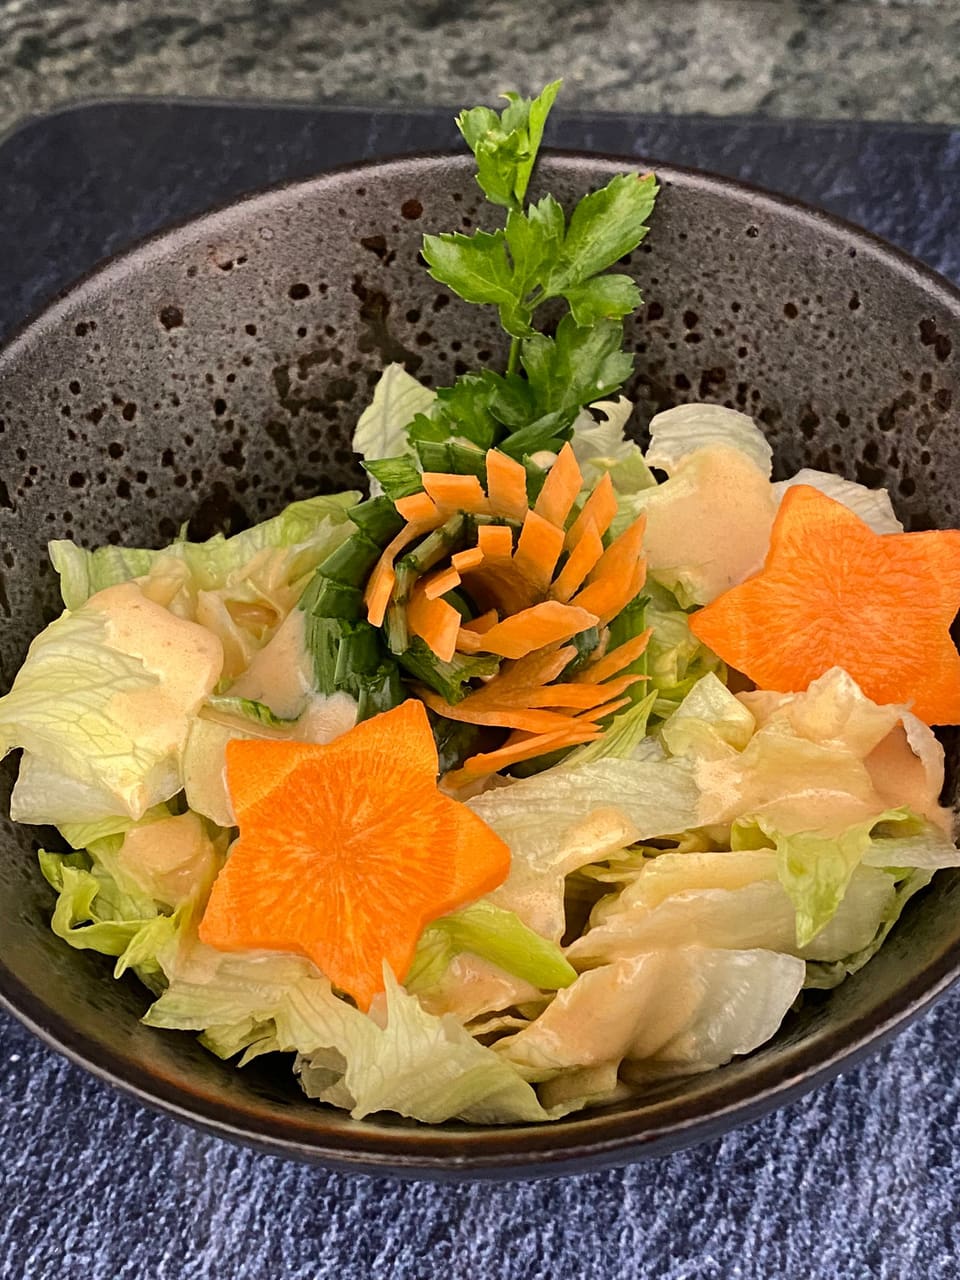 Salata decorada cun stailas da carotta per Nadal.